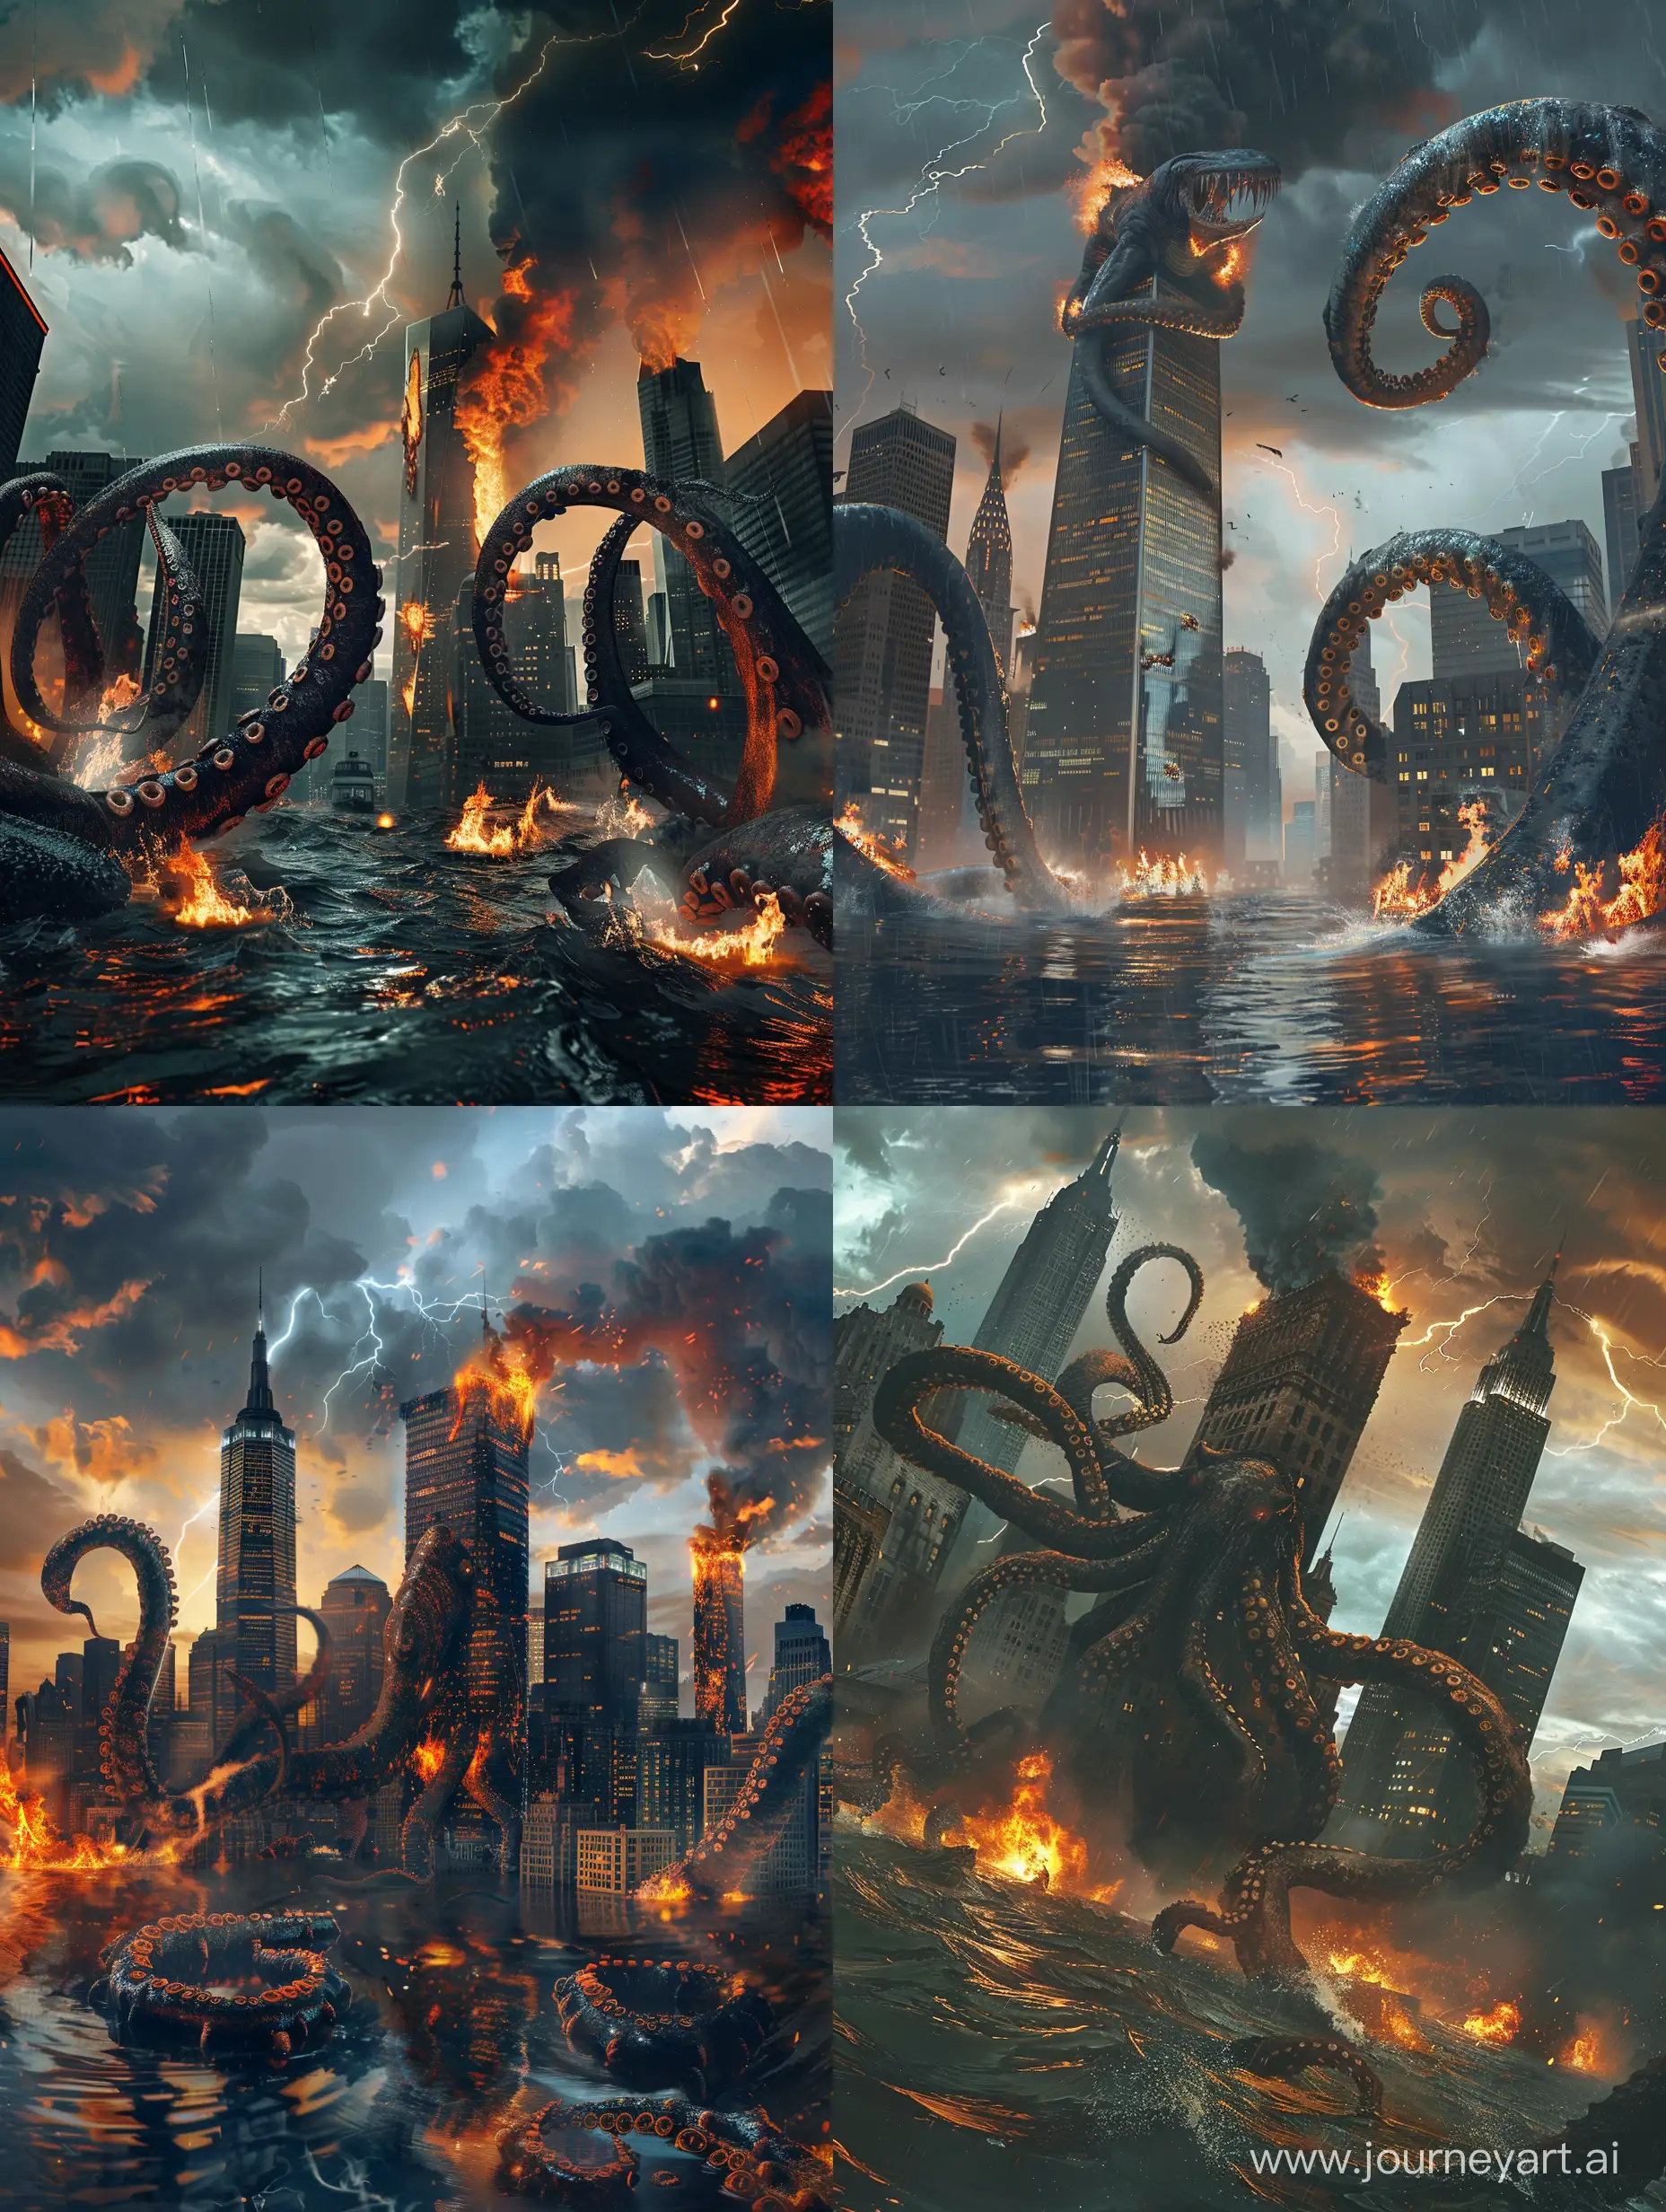 Kraken-Emerges-in-Urban-Apocalypse-Devastating-Tentacles-and-Inferno